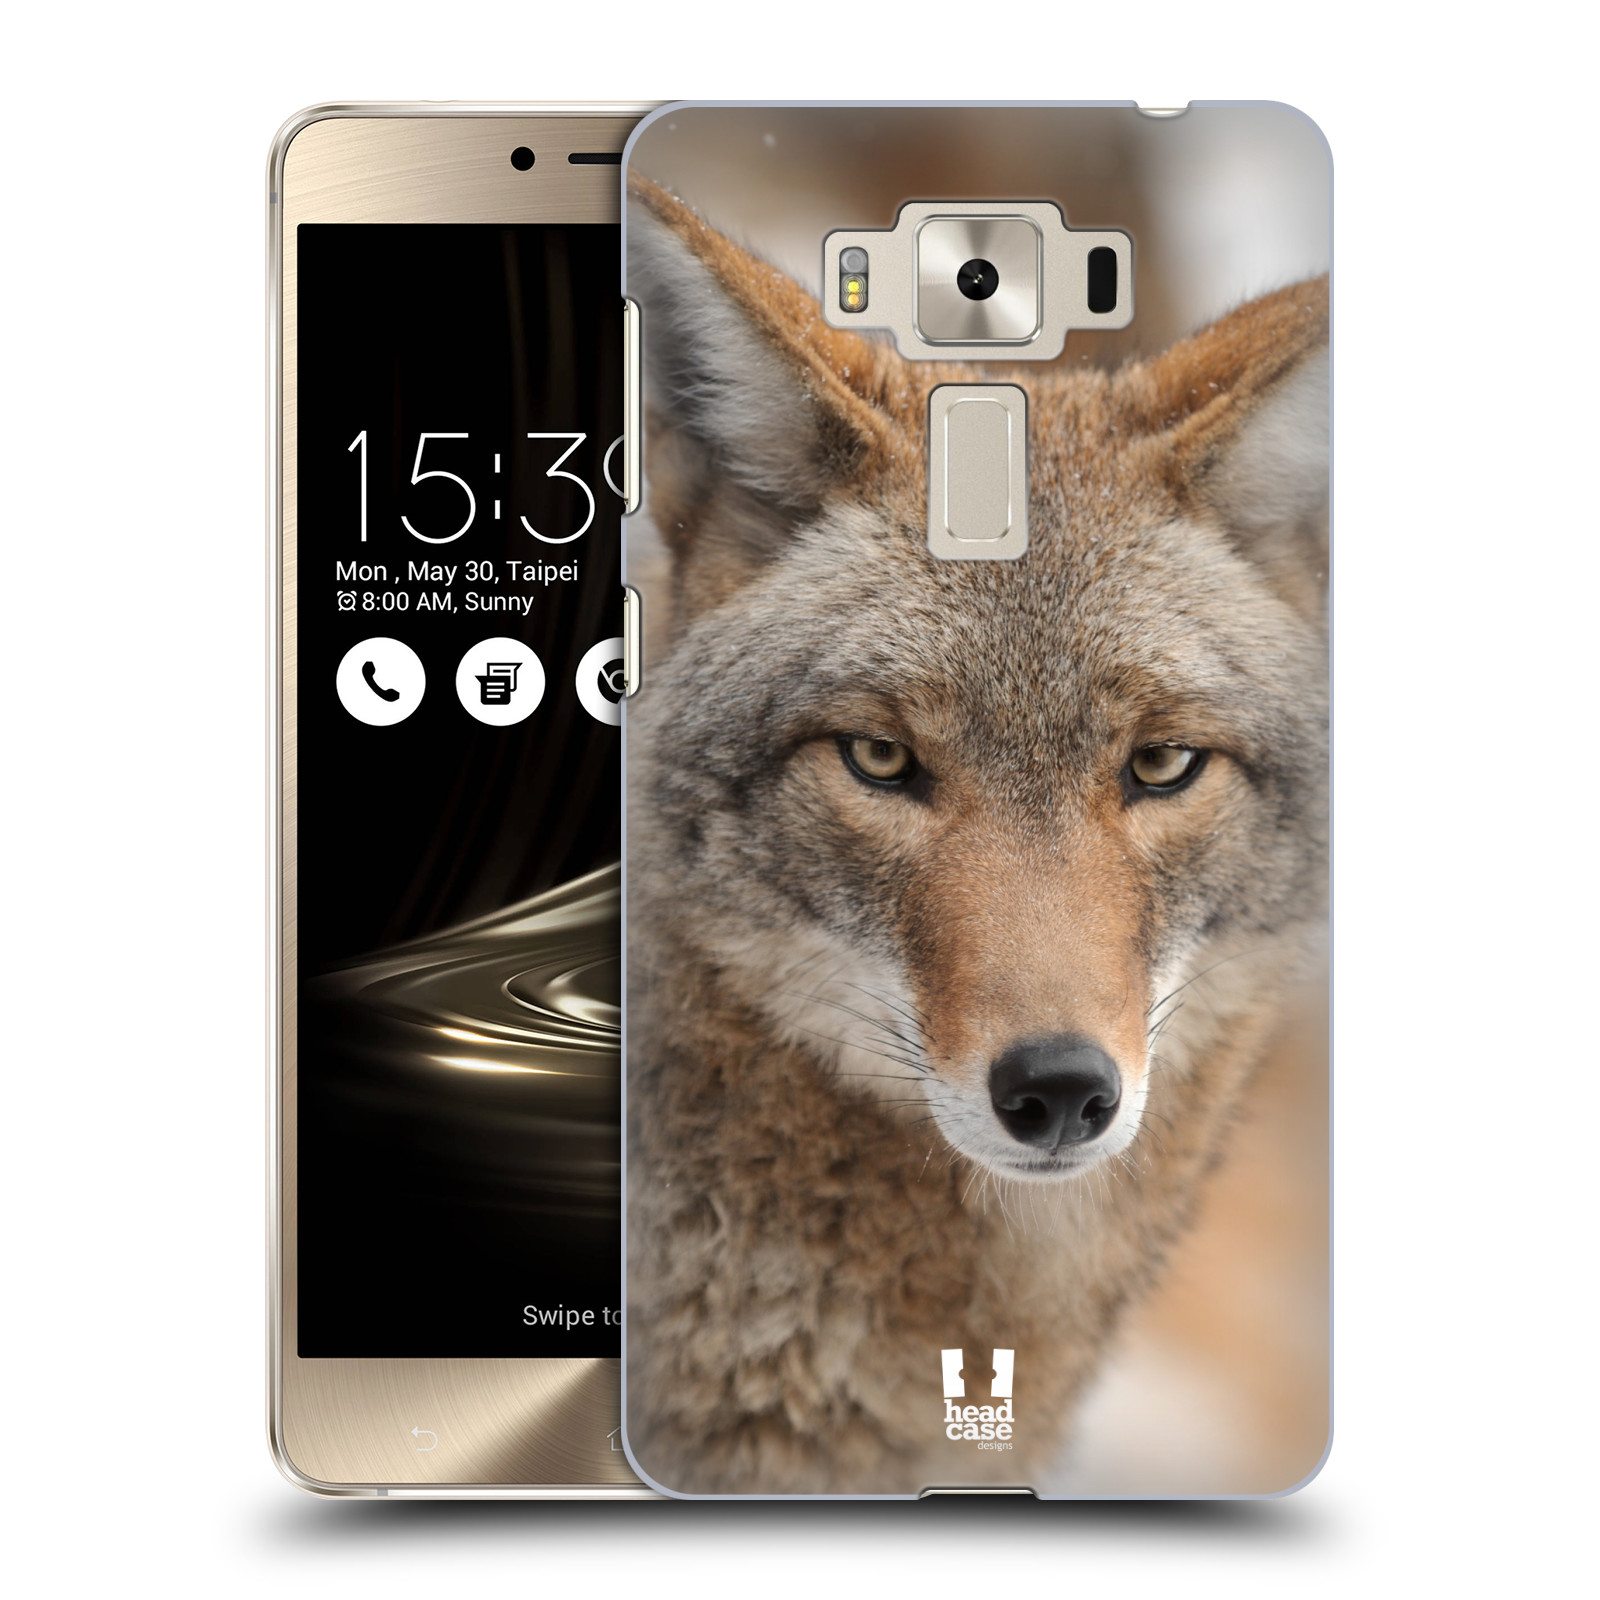 HEAD CASE plastový obal na mobil Asus Zenfone 3 DELUXE ZS550KL vzor slavná zvířata foto kojot